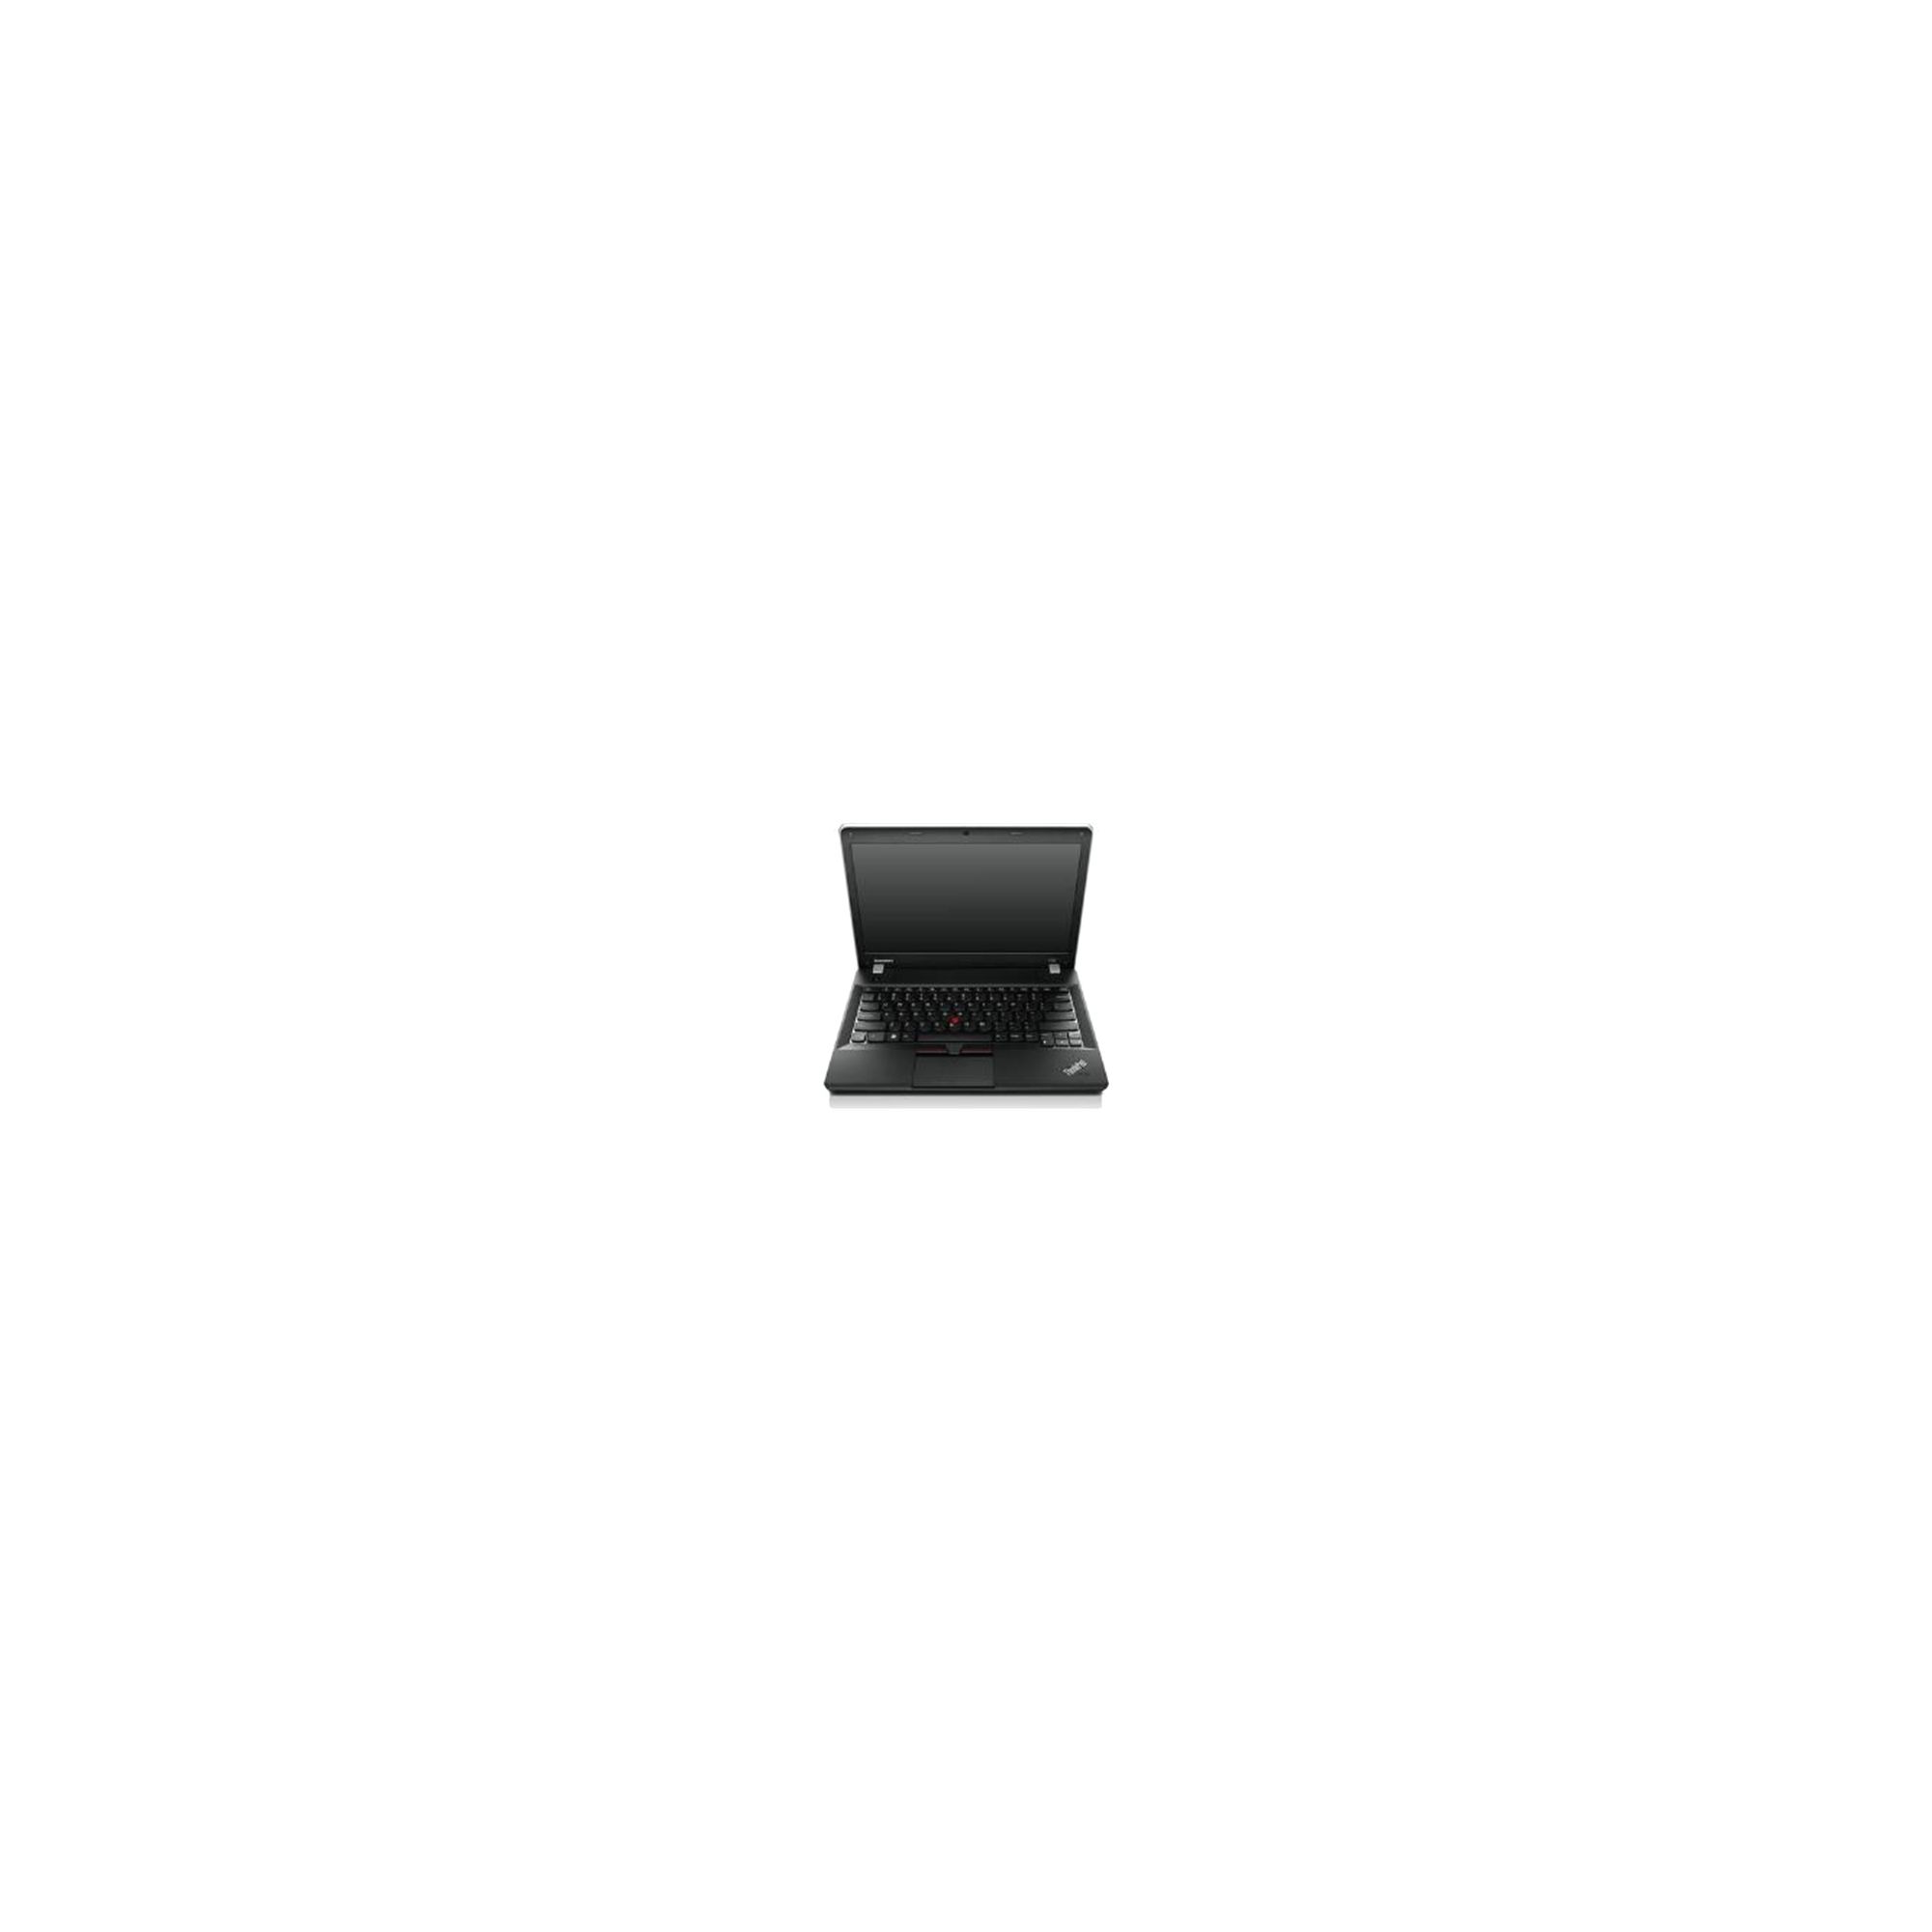 Lenovo ThinkPad Edge E335 335567G (13.3 inch) Notebook AMD (E2-1800) 1.7GHz 4GB 320GB WLAN BT Webcam Windows 8 Pro 64-bit (AMD Radeon HD7340) Black at Tesco Direct